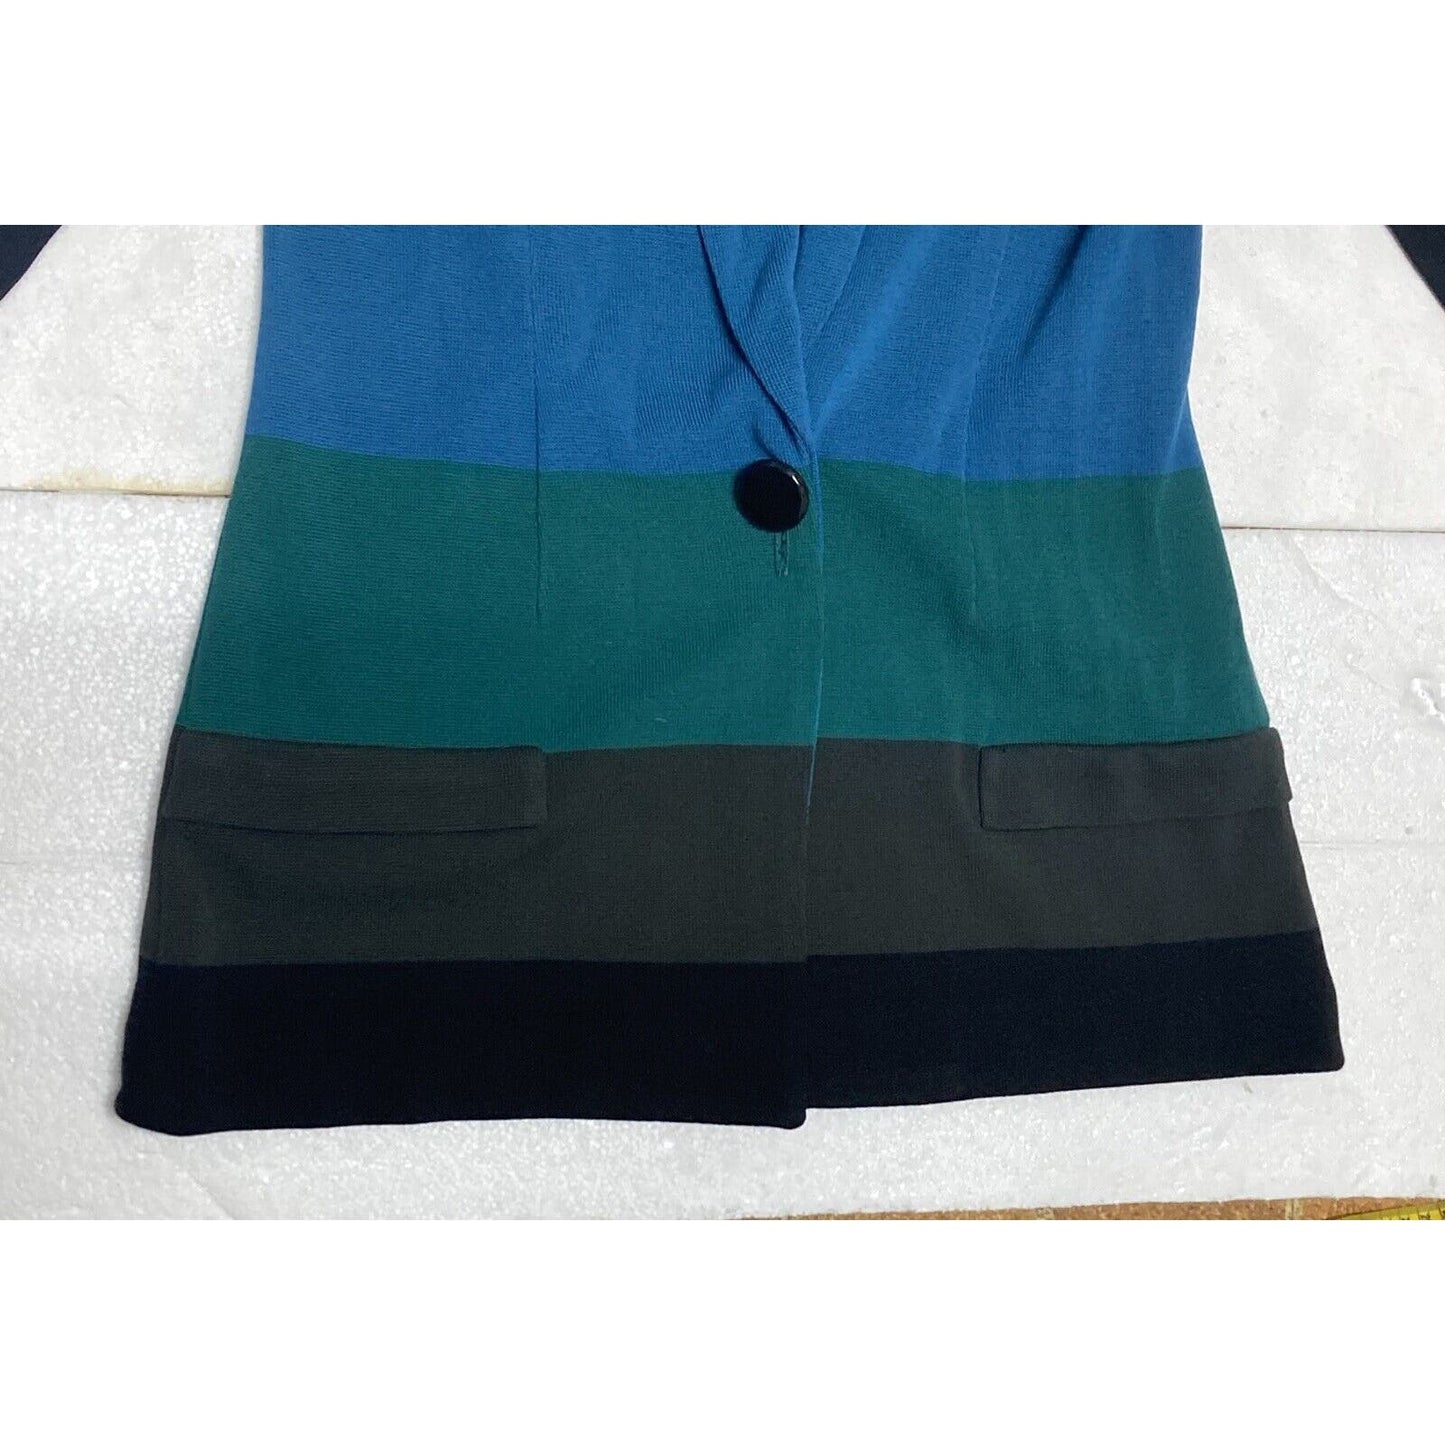 Misook Janice Multi-Color Blue Green Black Colorblock Knit Jacket XS